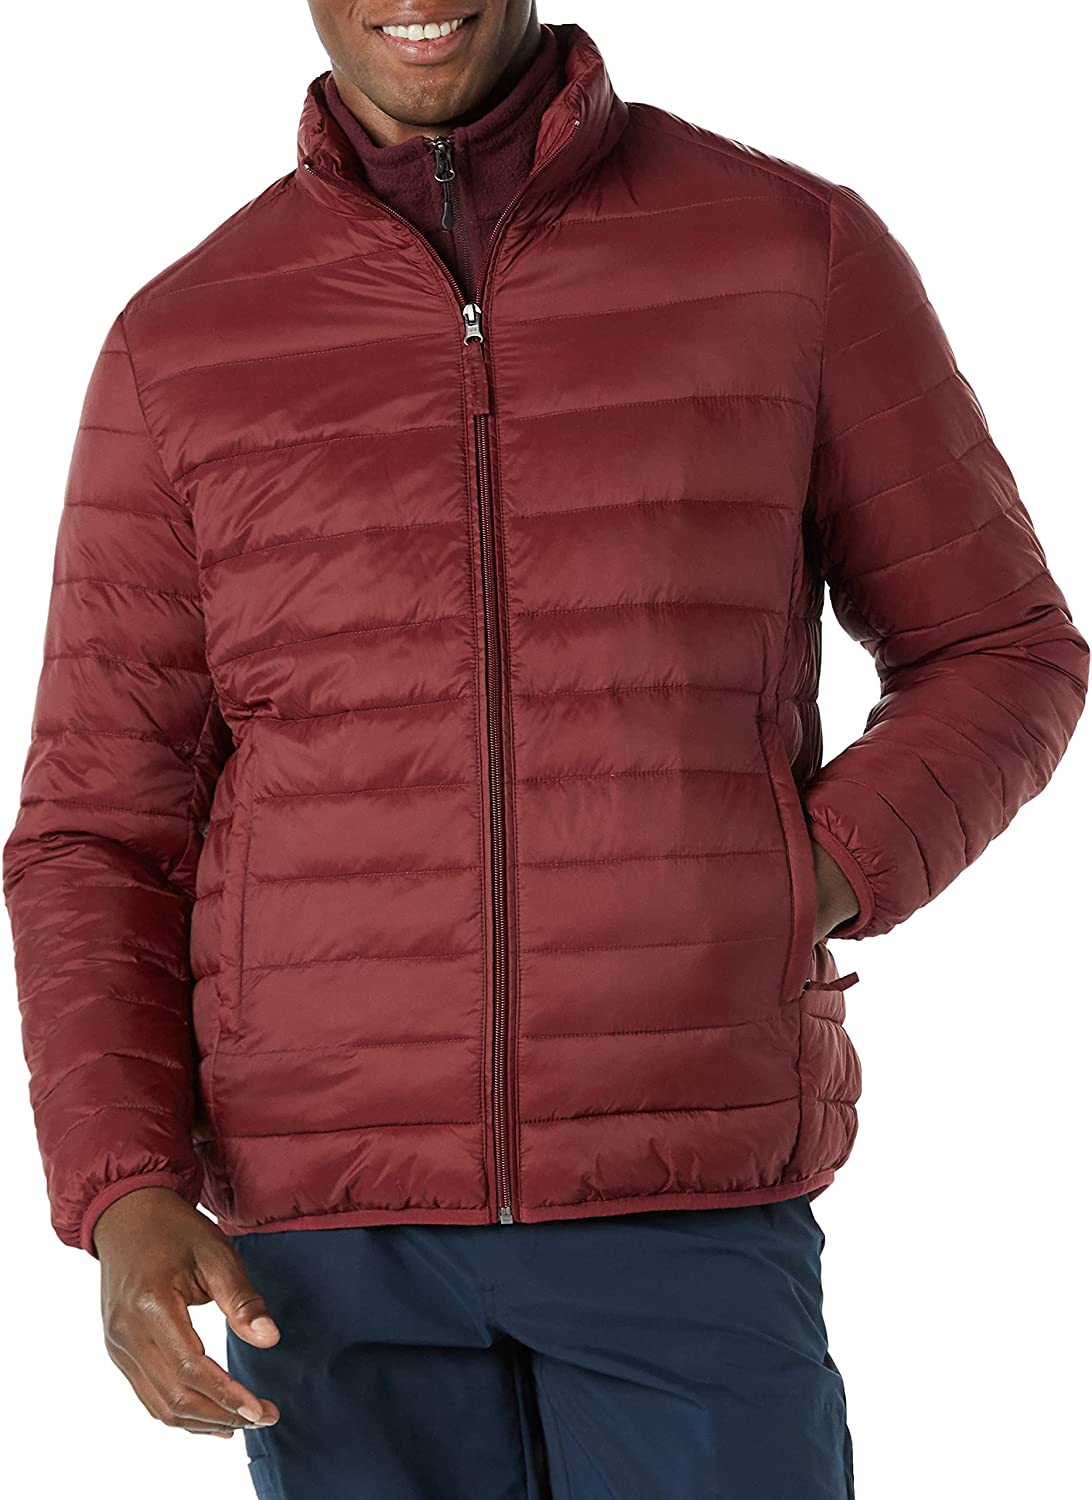 Men's Packable Lightweight Water-Resistant Puffer Jacket - Dark Red